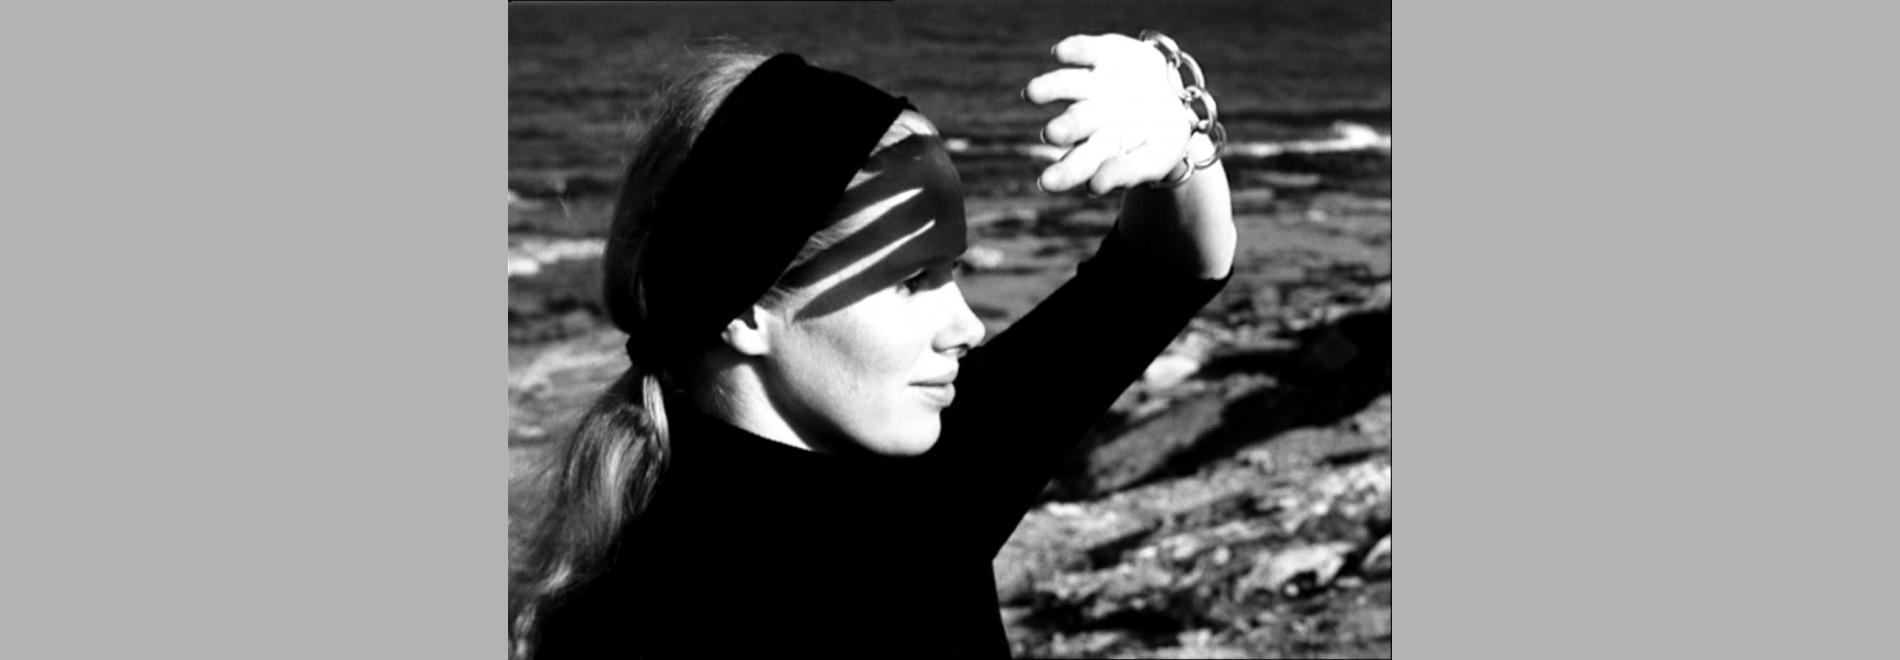 La modernitat narrativa - Persona (Ingmar Bergman, 1964)